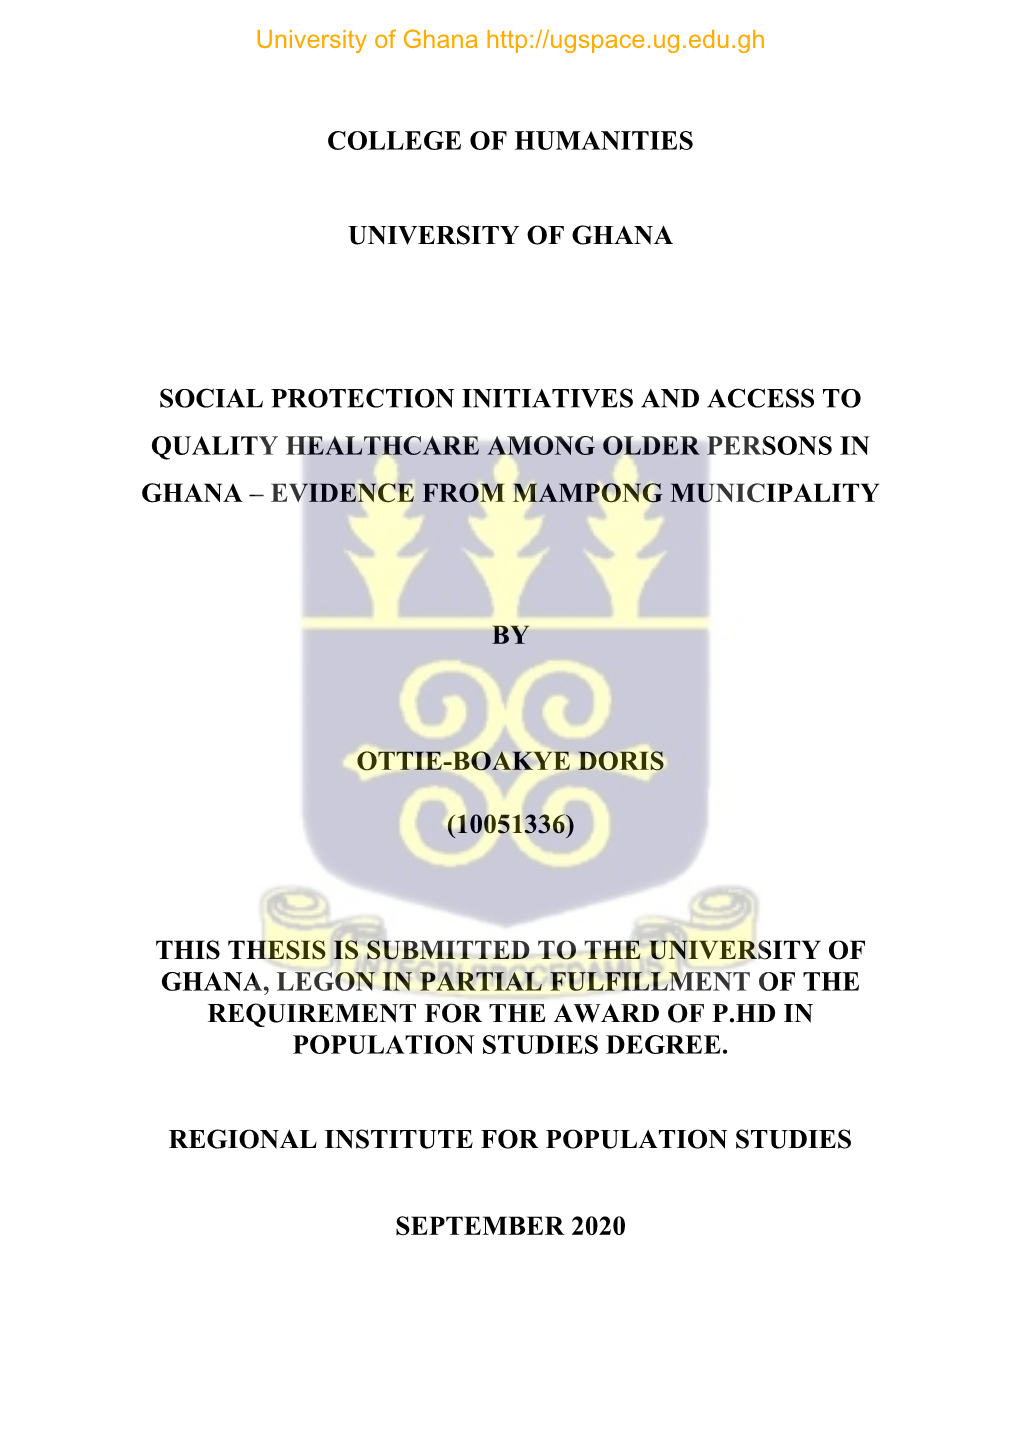 College of Humanities University of Ghana Social